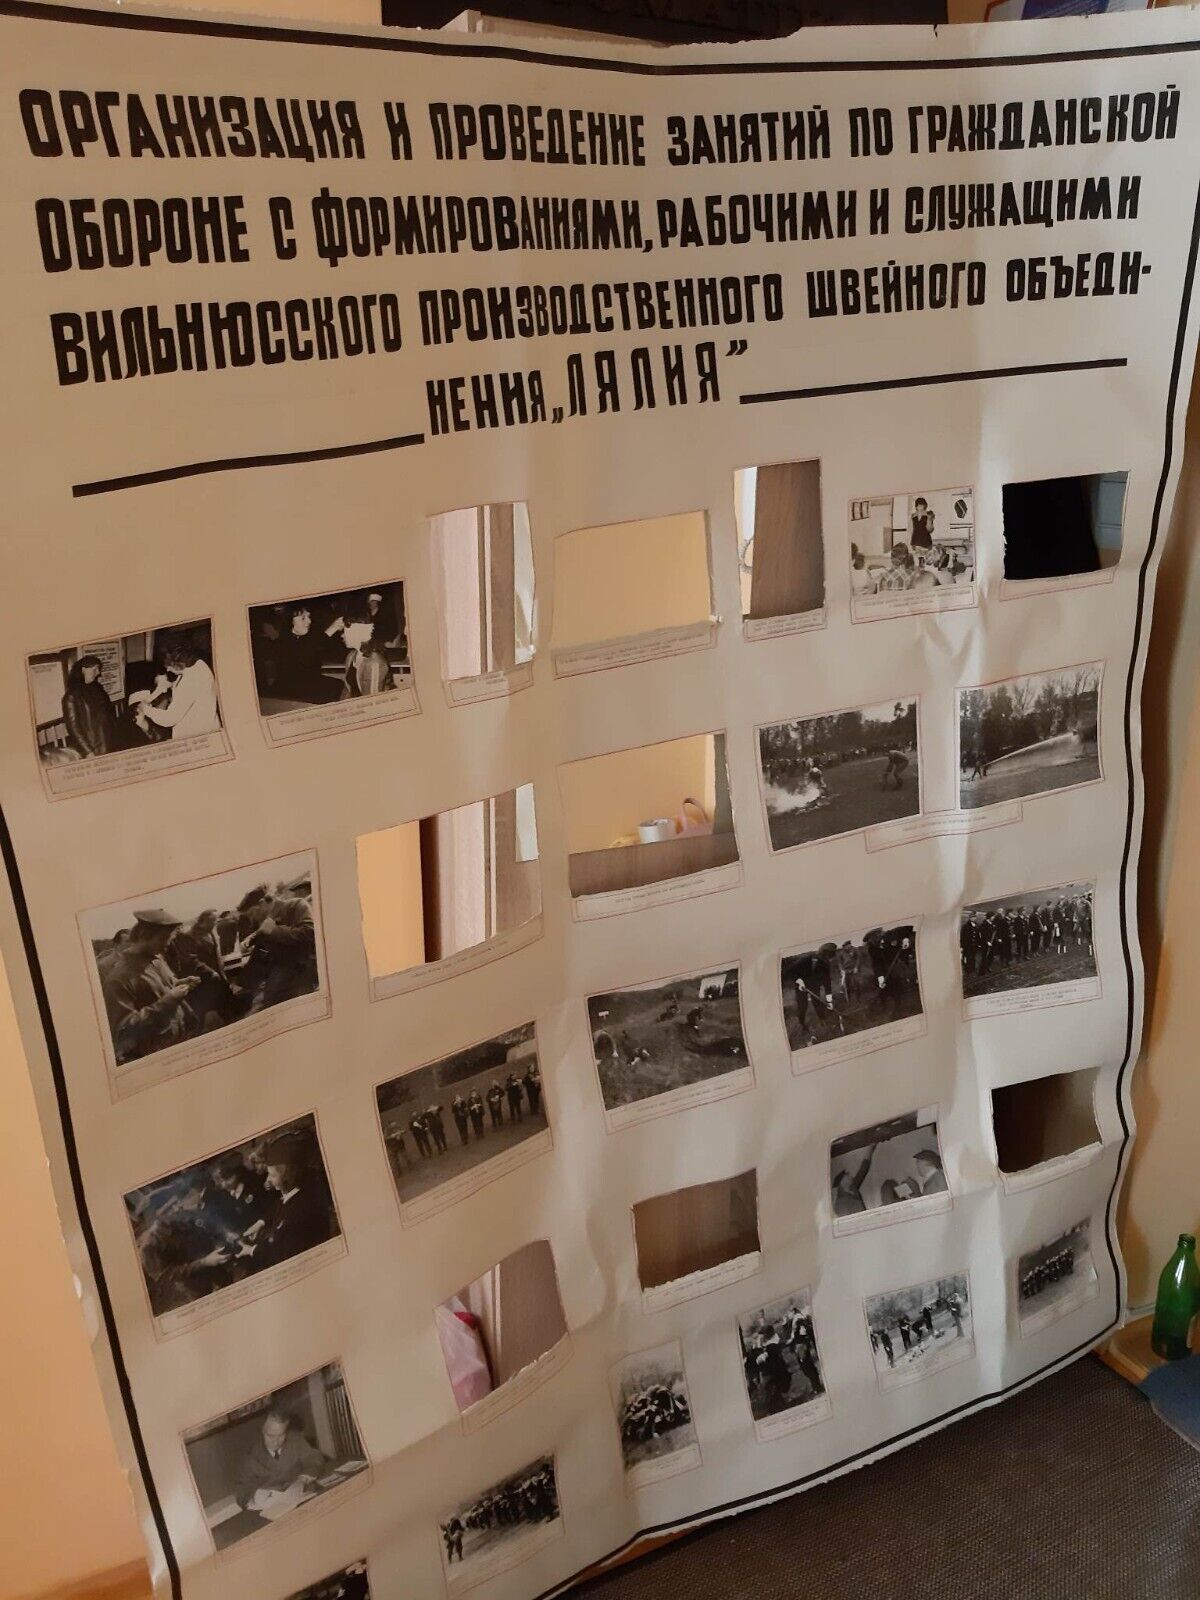 Huge Soviet bunker civil defense poster